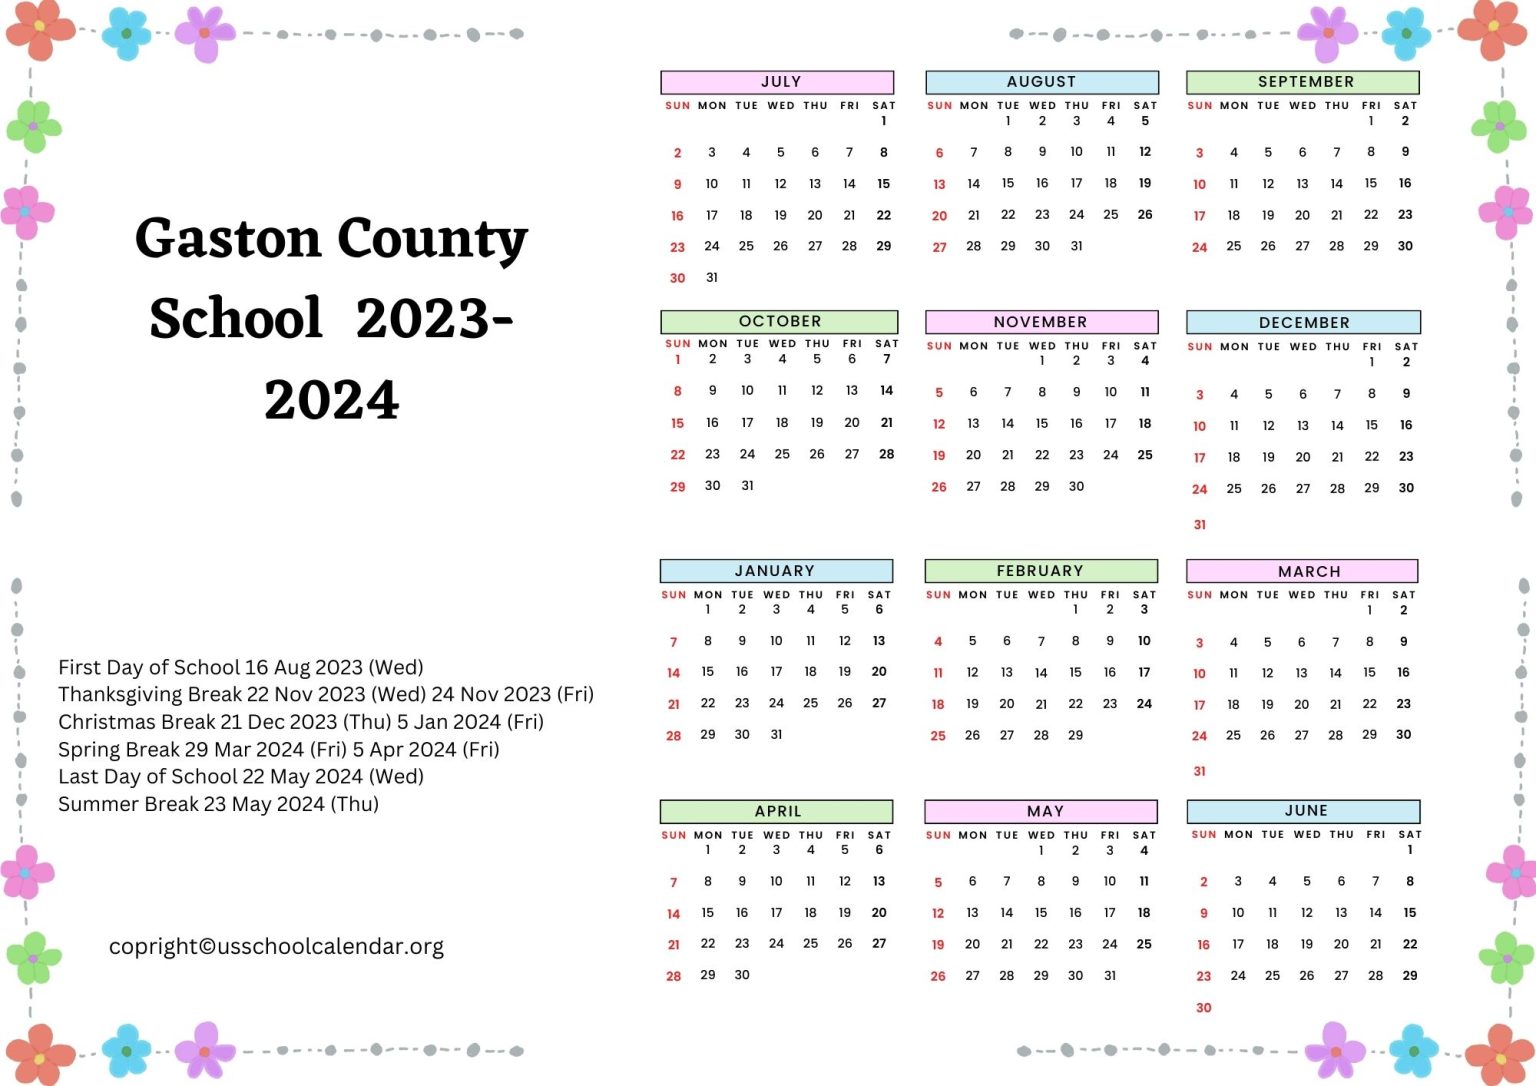 gaston-county-school-calendar-with-holidays-2023-2024